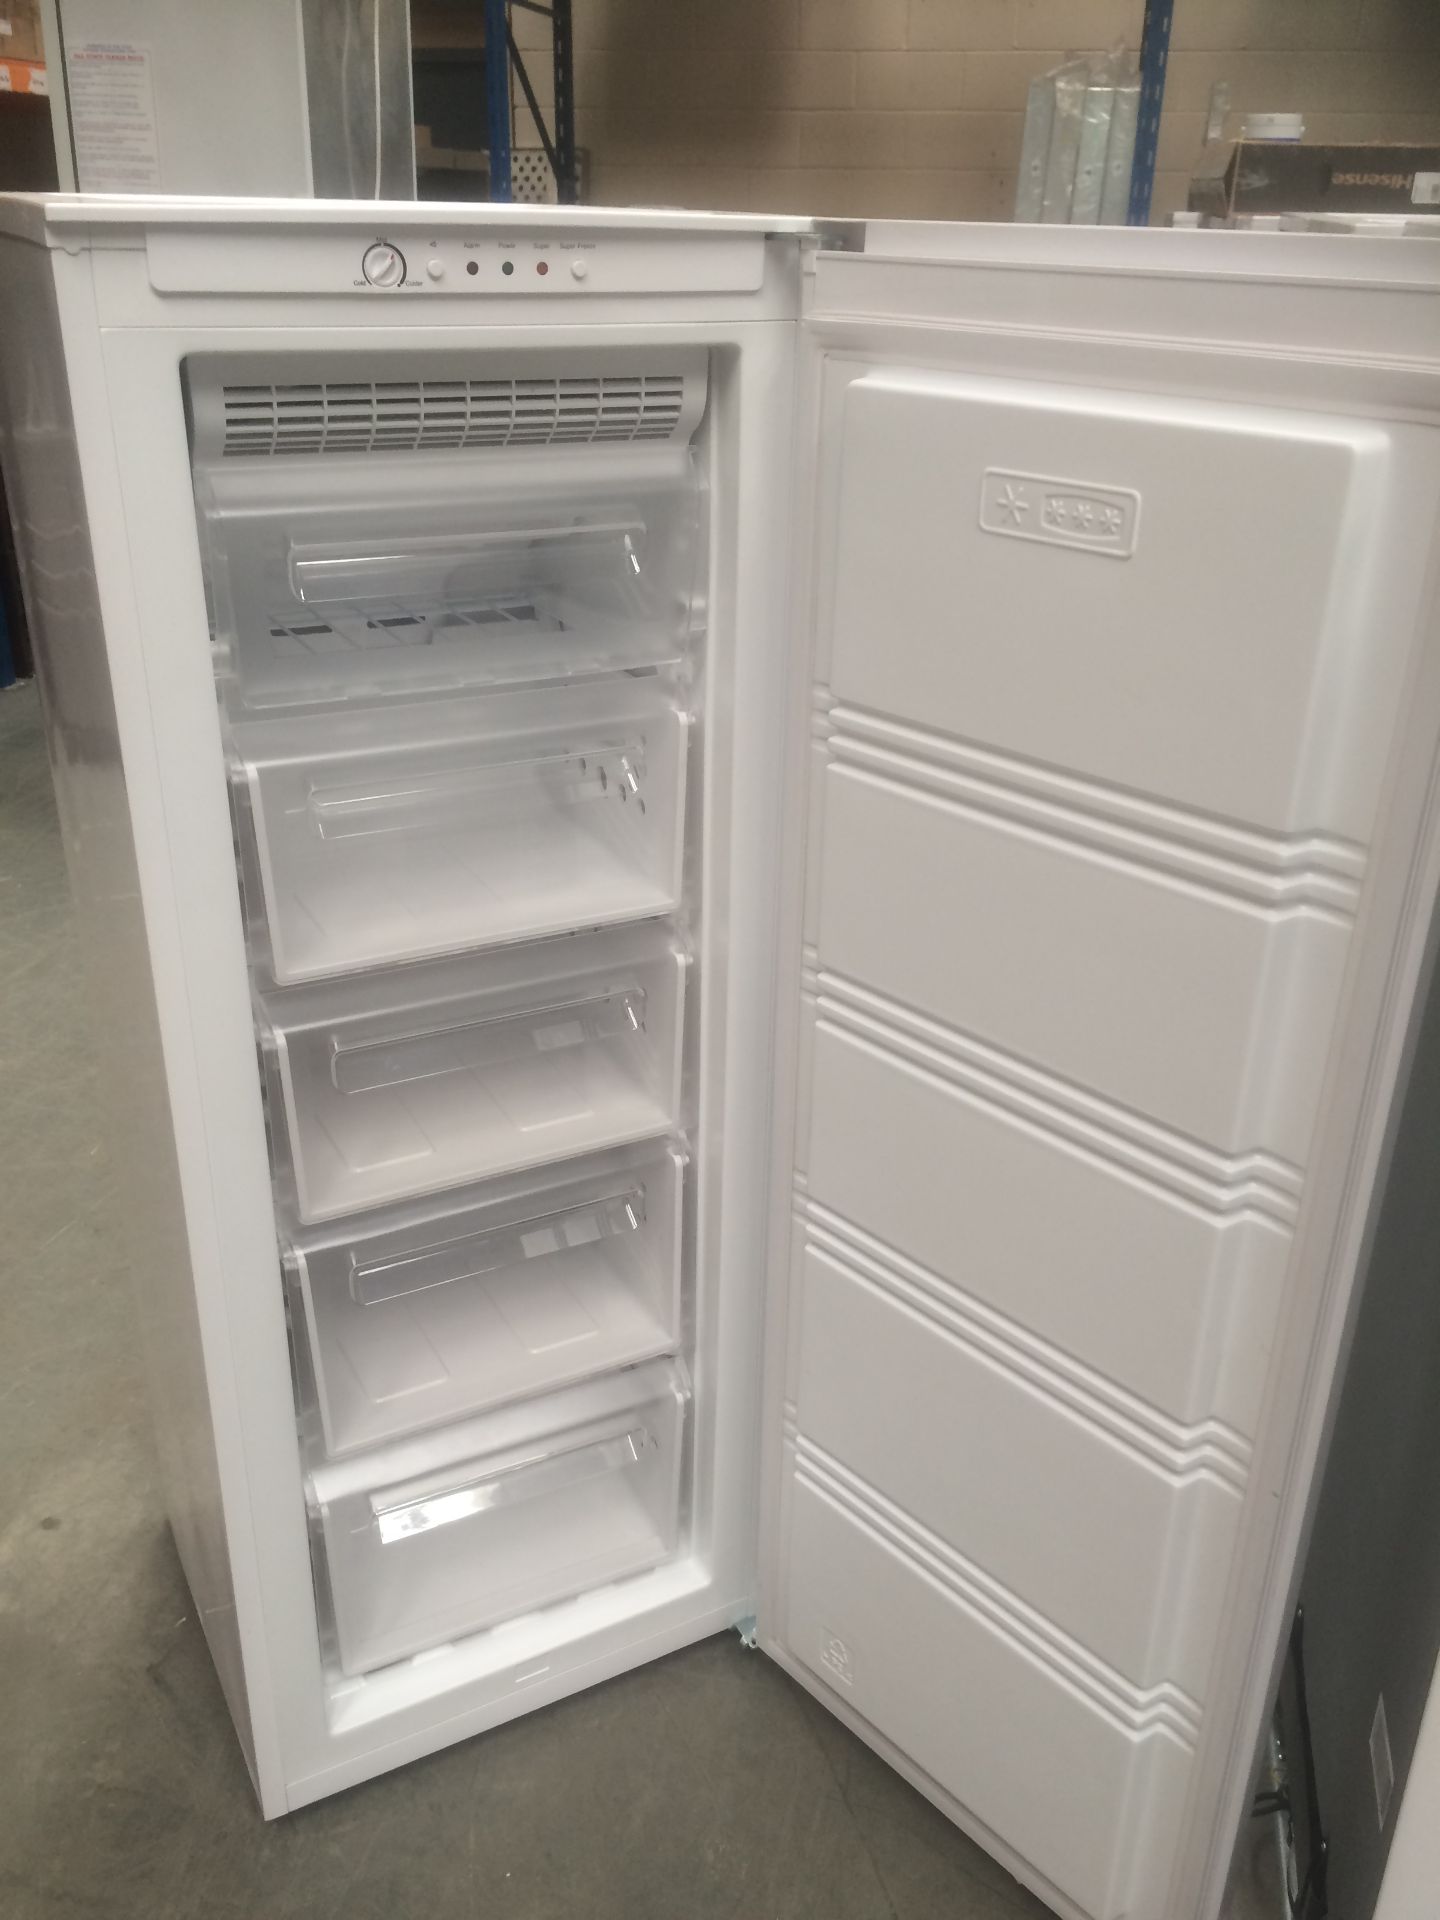 Fridgemaster freezer working 5 compartments 550mmX550mmX1440mm high - Image 2 of 3